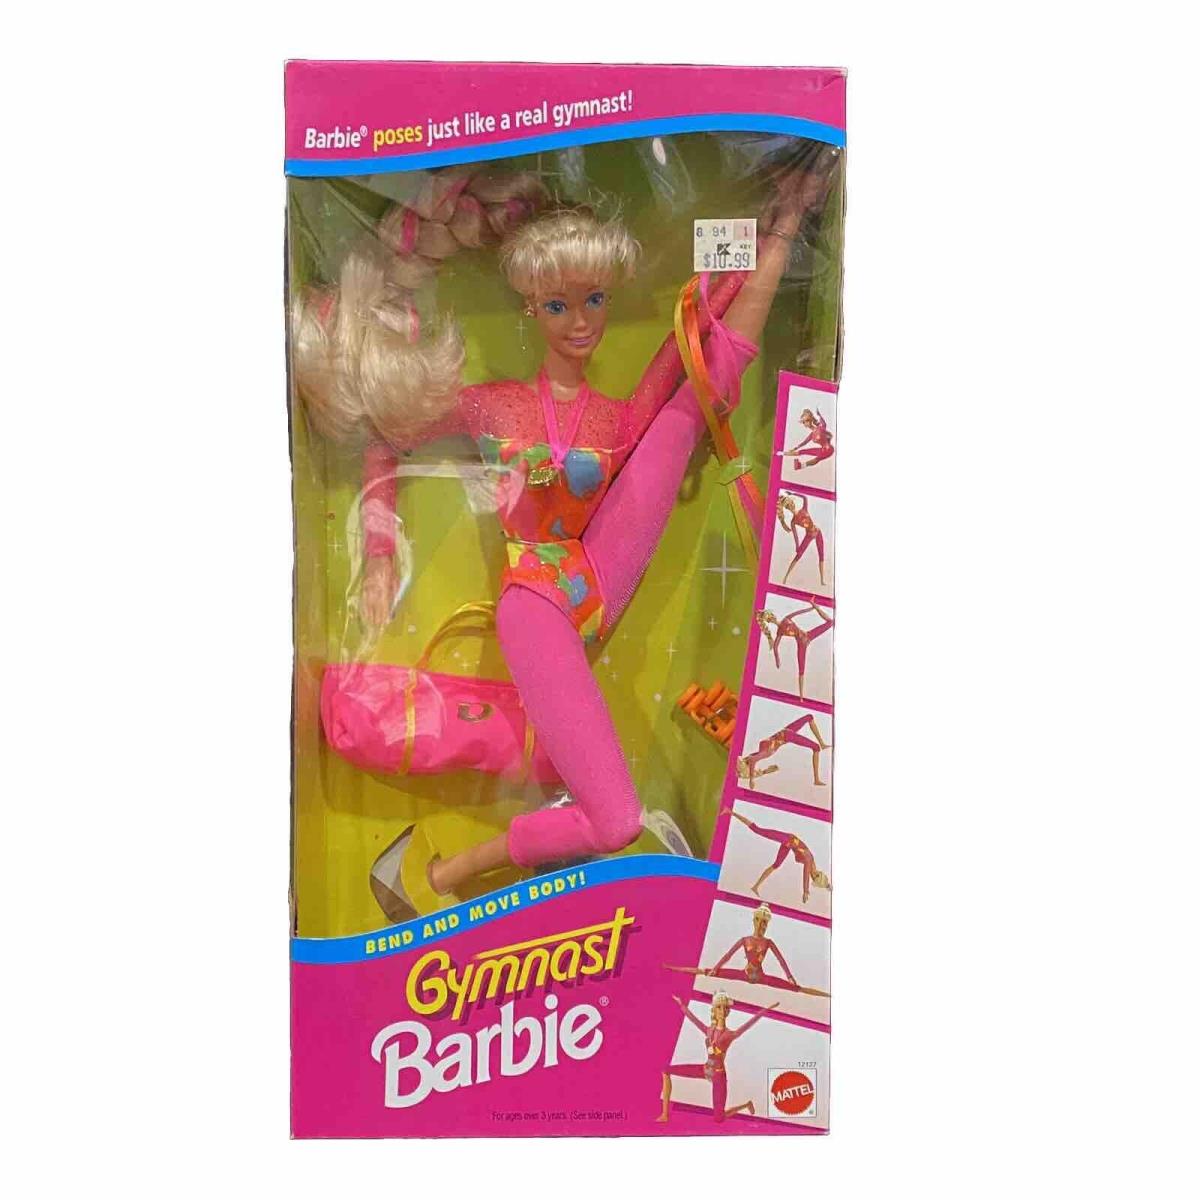 1993 Gymnast Barbie Doll Bend Move Body Mattel 12127